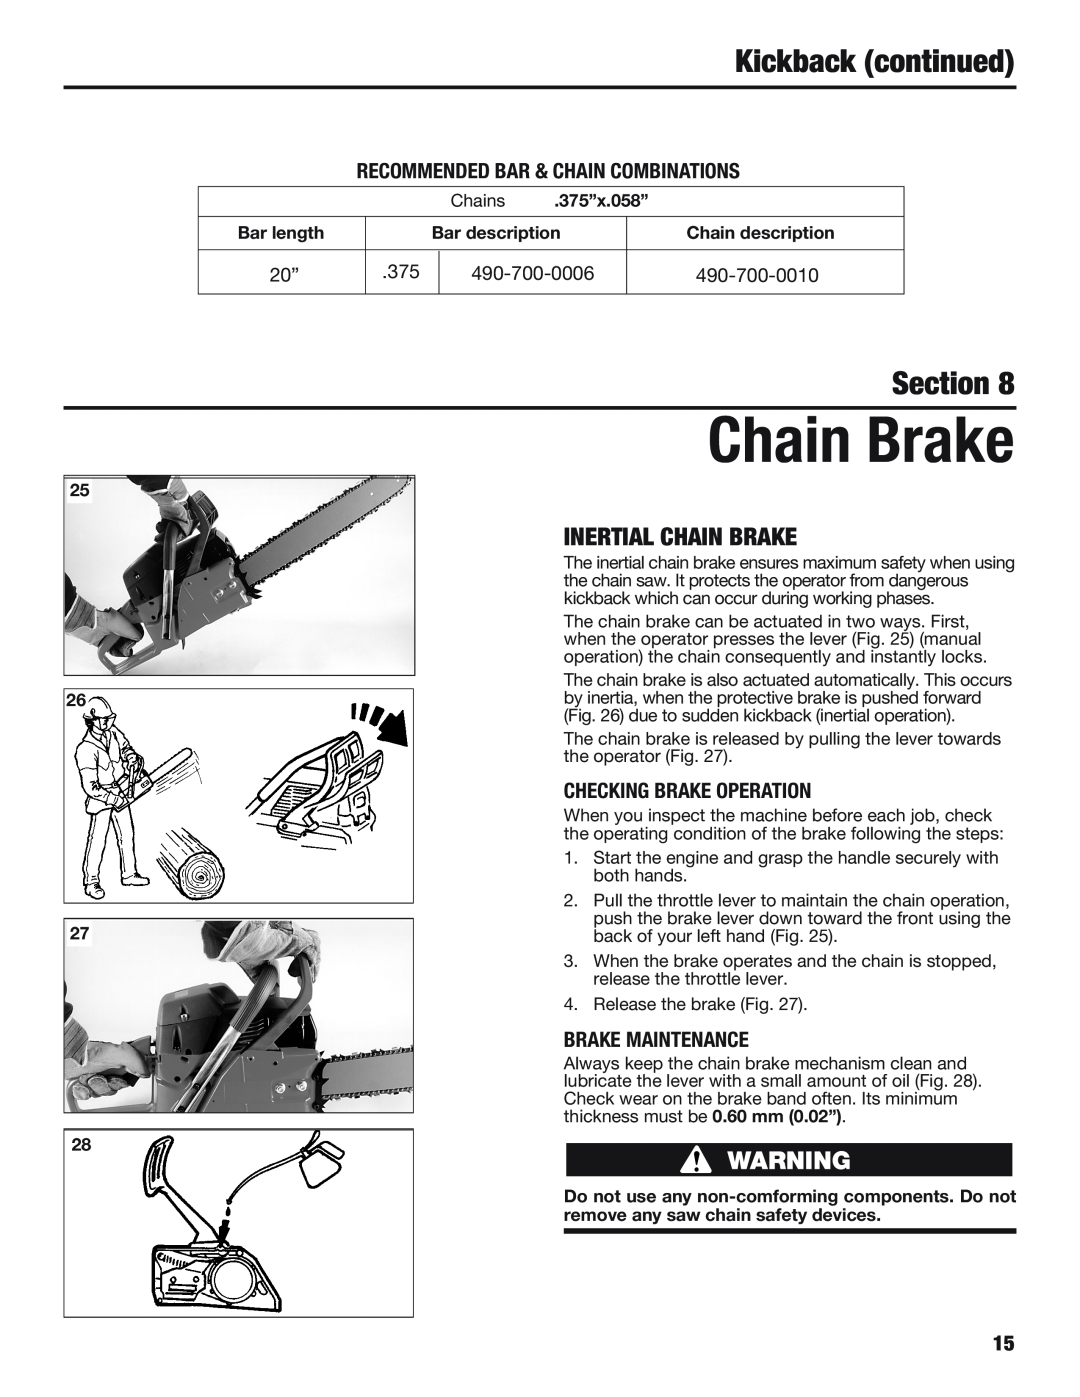 Cub Cadet CS5720 Kickback continued, Inertial Chain Brake, Recommended Bar & Chain Combinations, Brake Maintenance 